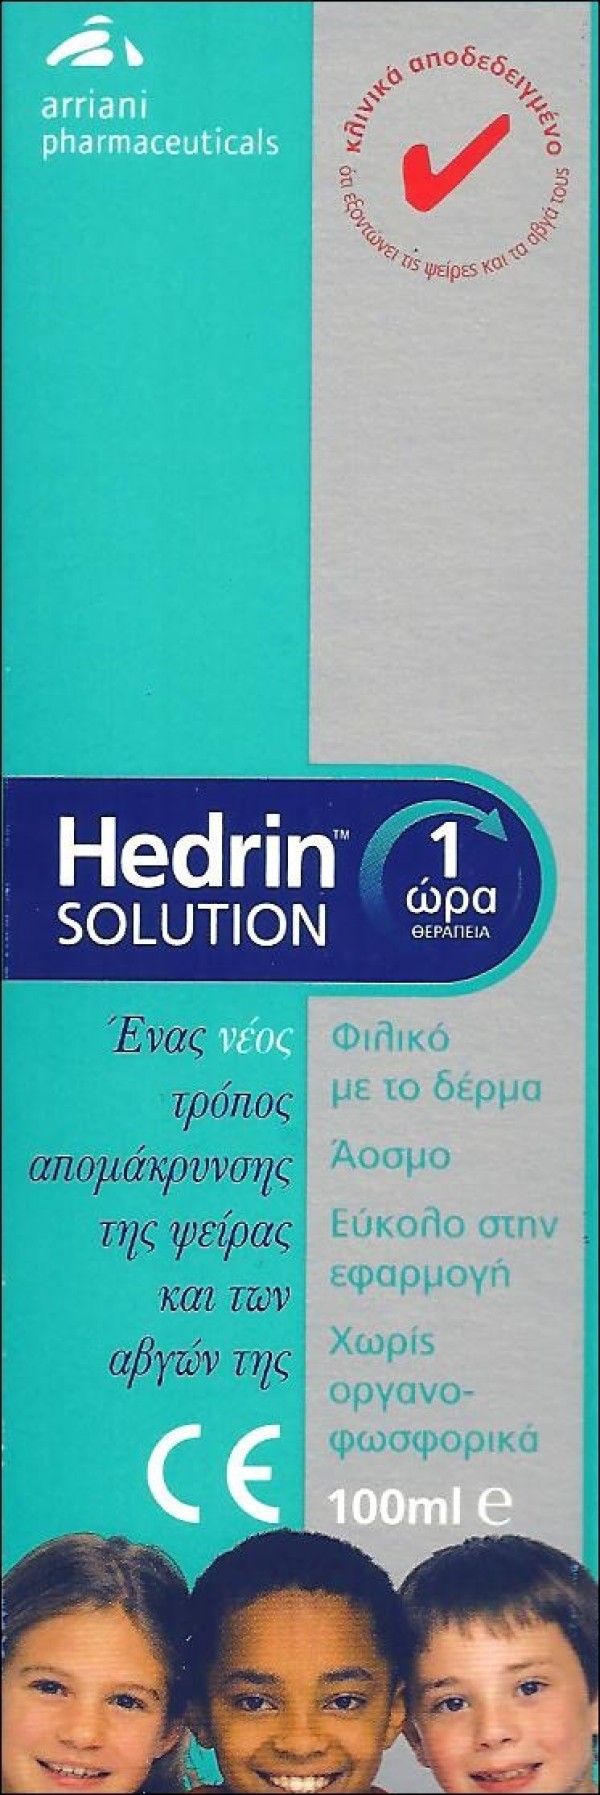 Hedrin Solution Lotion - Αντιφθειρική Λοσιόν 100ml product photo